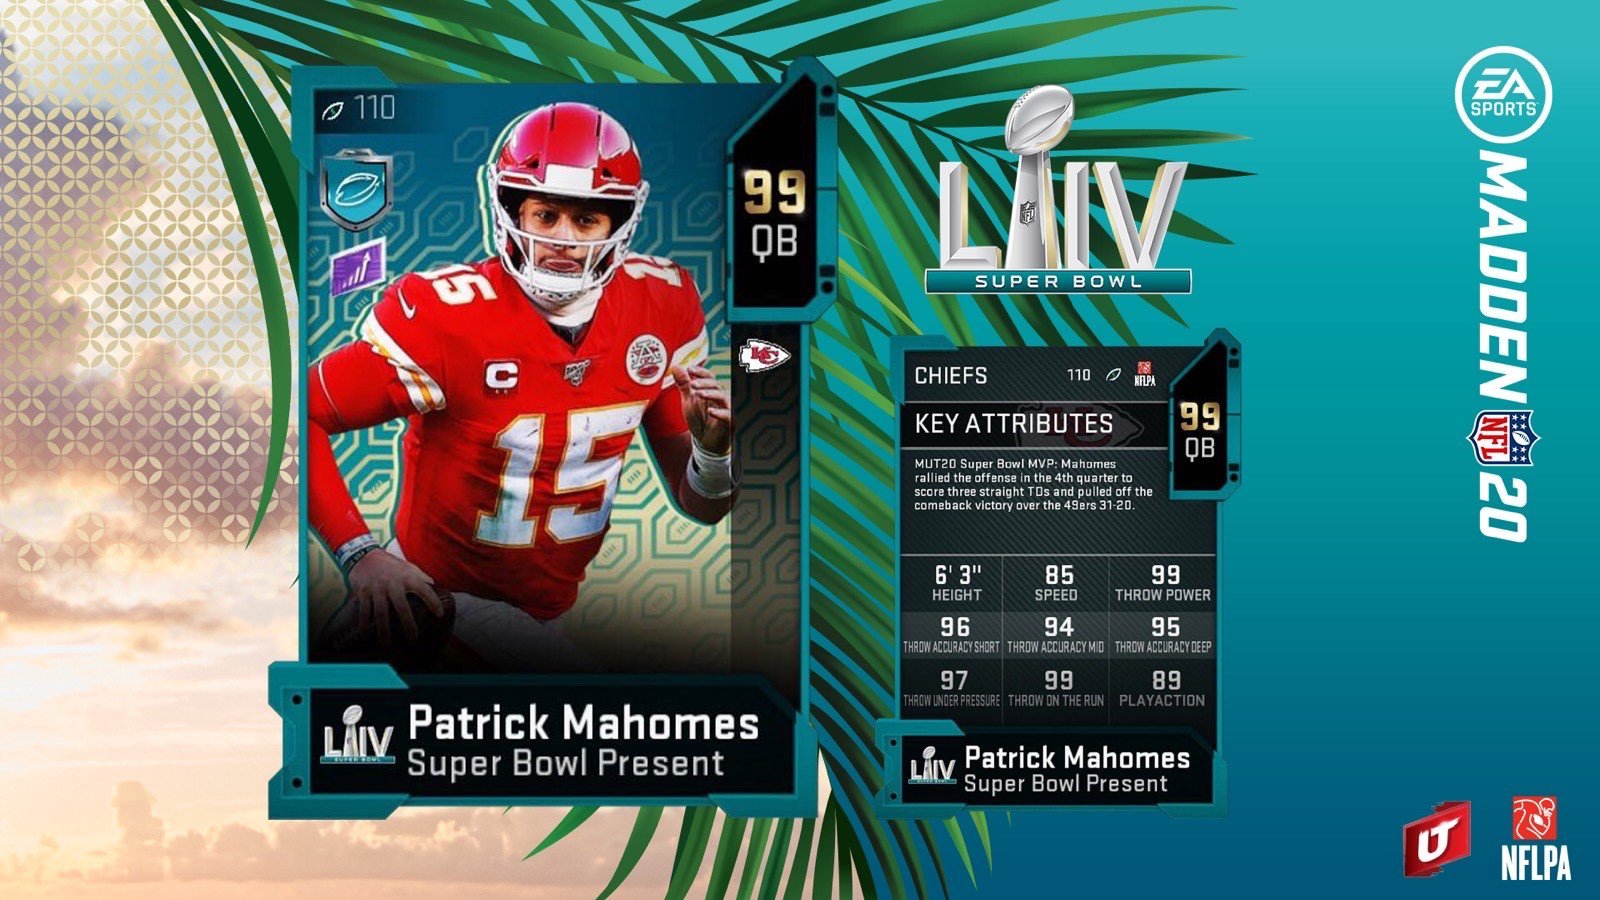  Patrick Mahomes II Super Bowl LIV MVP Art Football